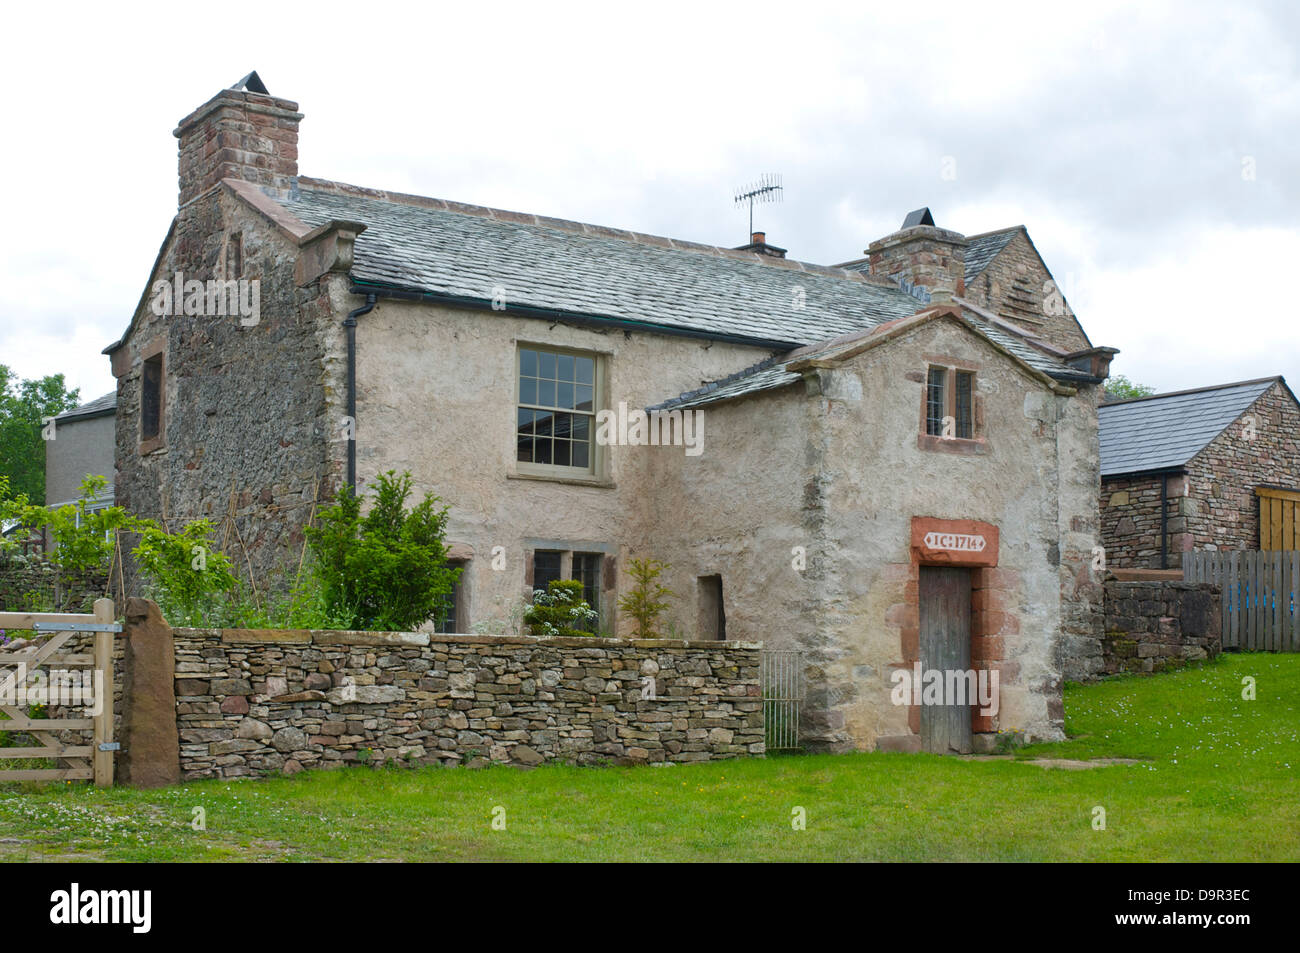 Old house with datestone (1714) in the village of Crosby Garrett, near Kirkby Stephen, Cumbria, England UK Stock Photo